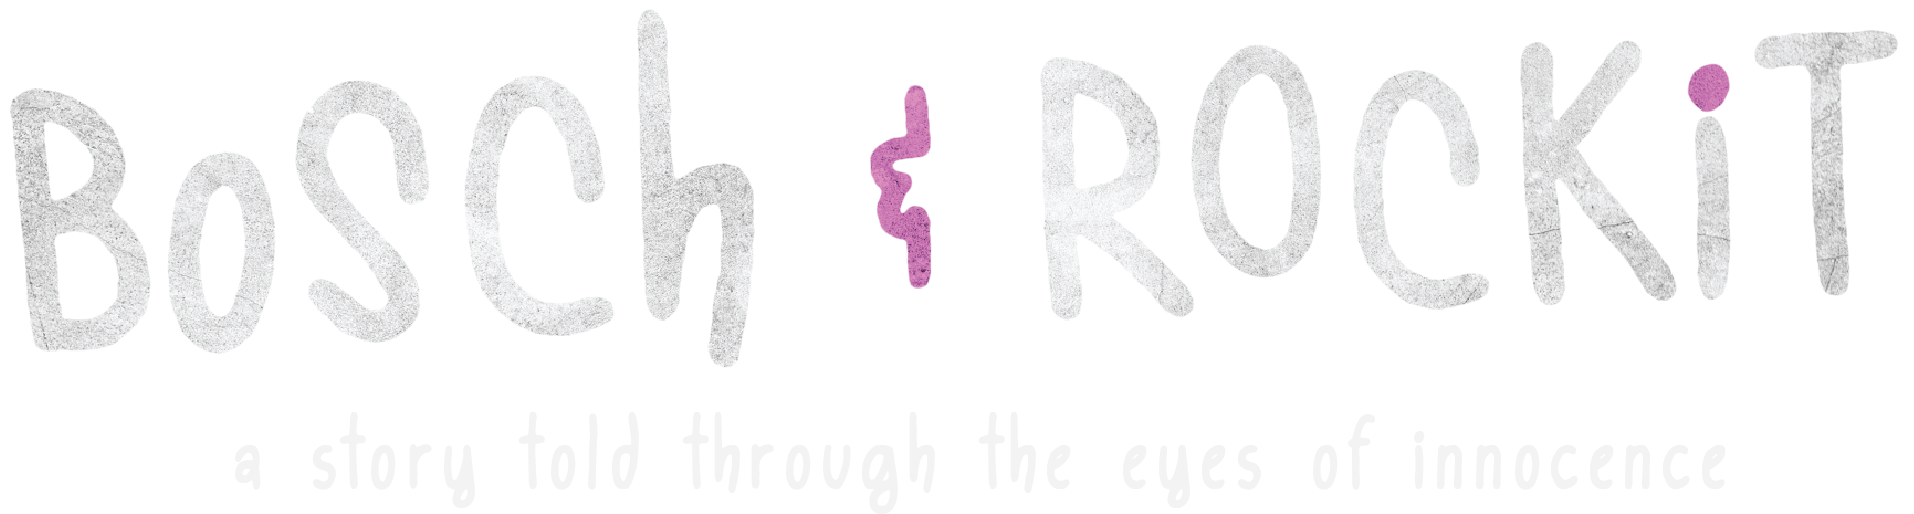 3 BR logo tagline